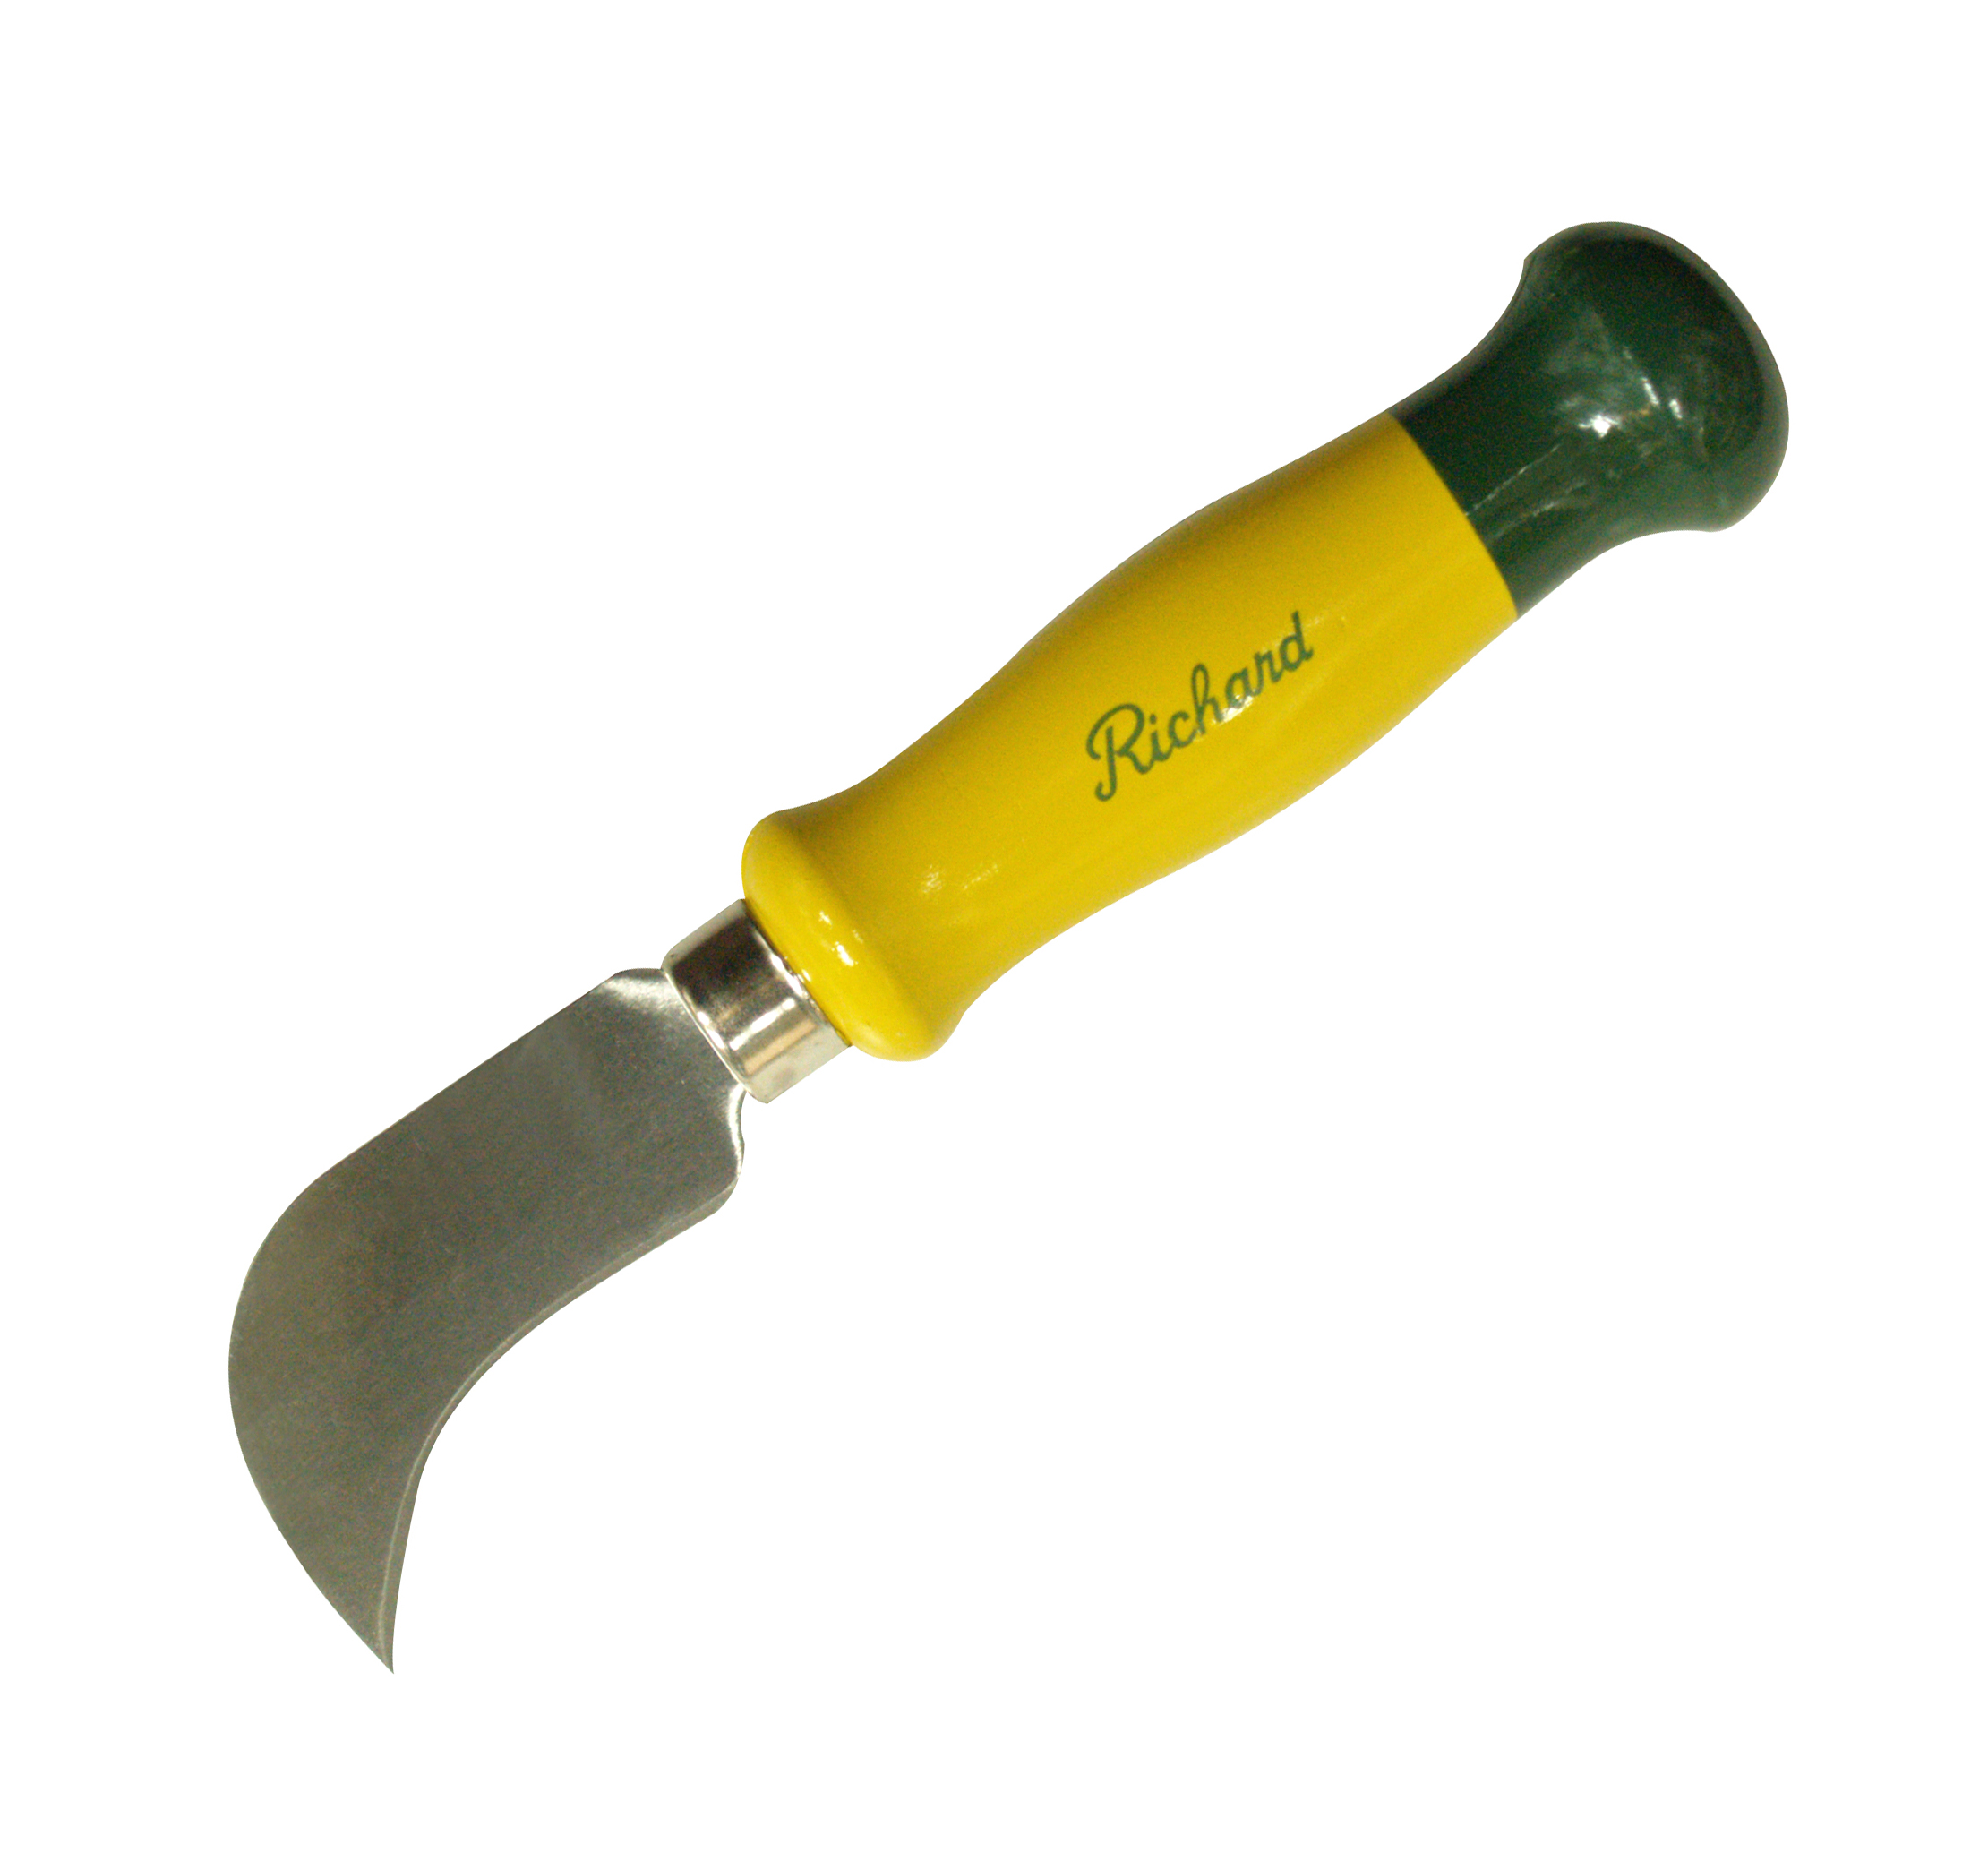 Richard - Long Point Flooring Knife (0.075